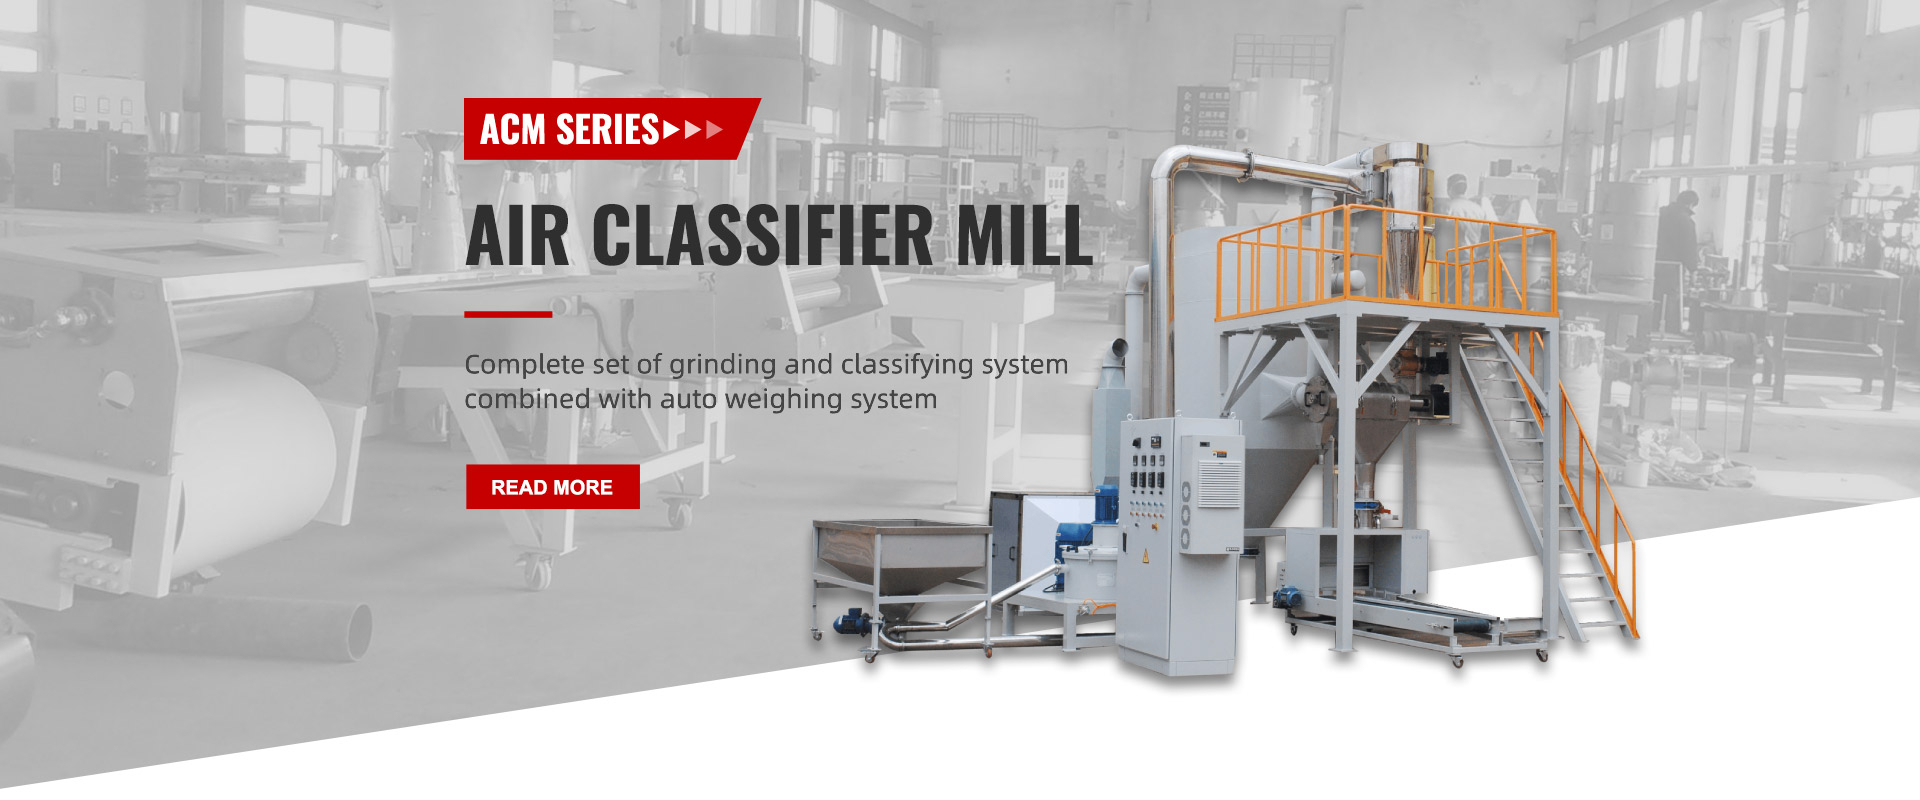 Air classifier mill